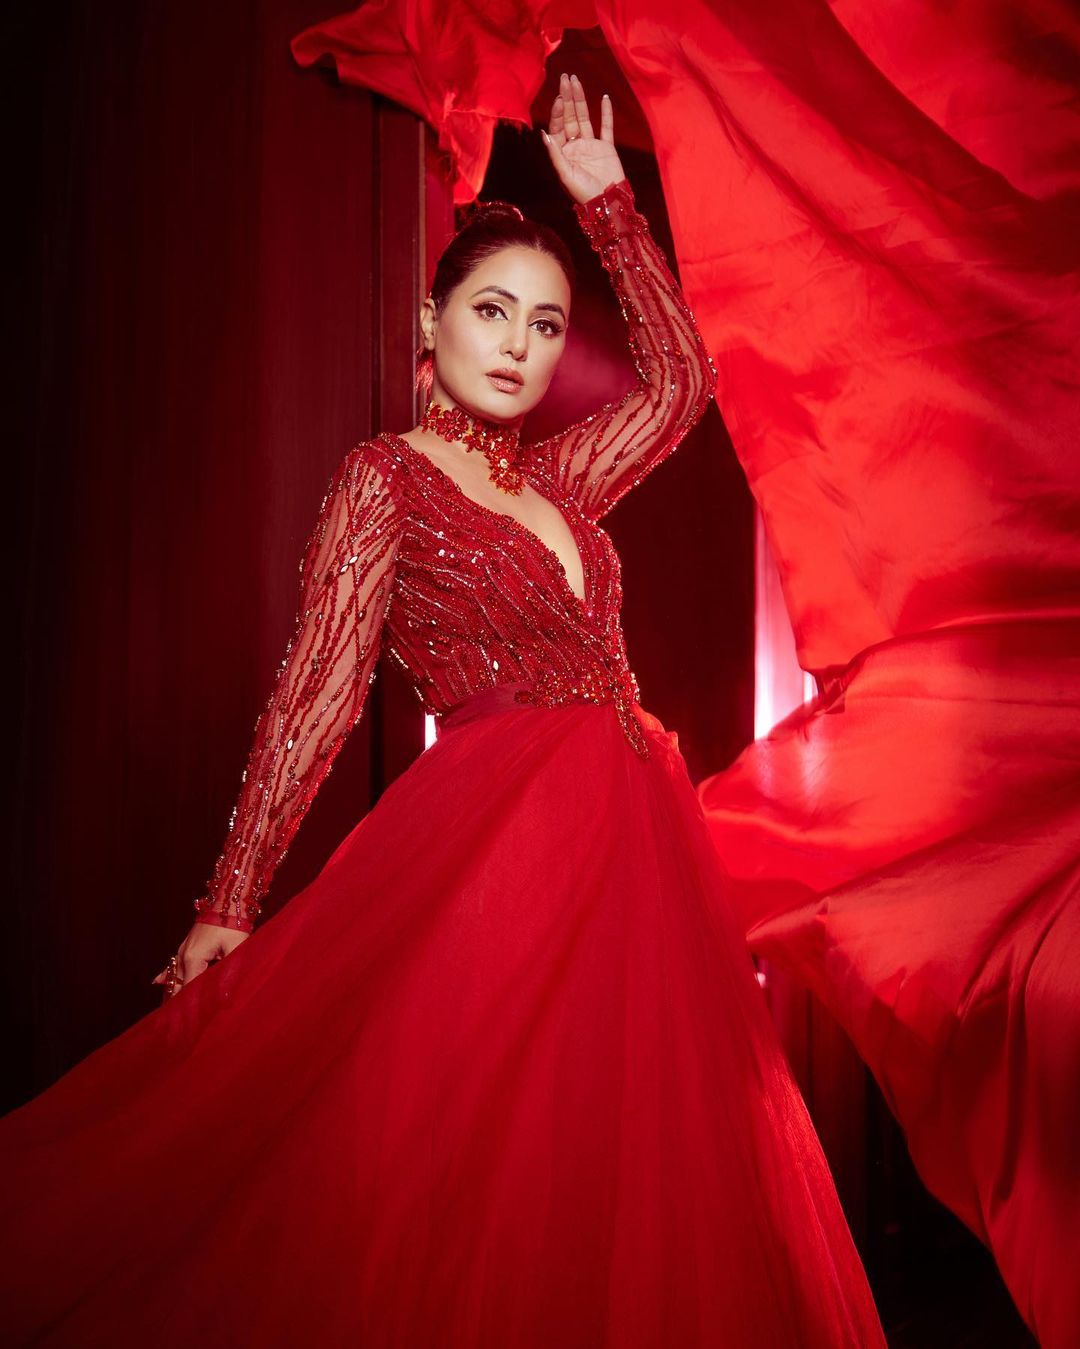 Lace Red Dress | A Southern Drawl